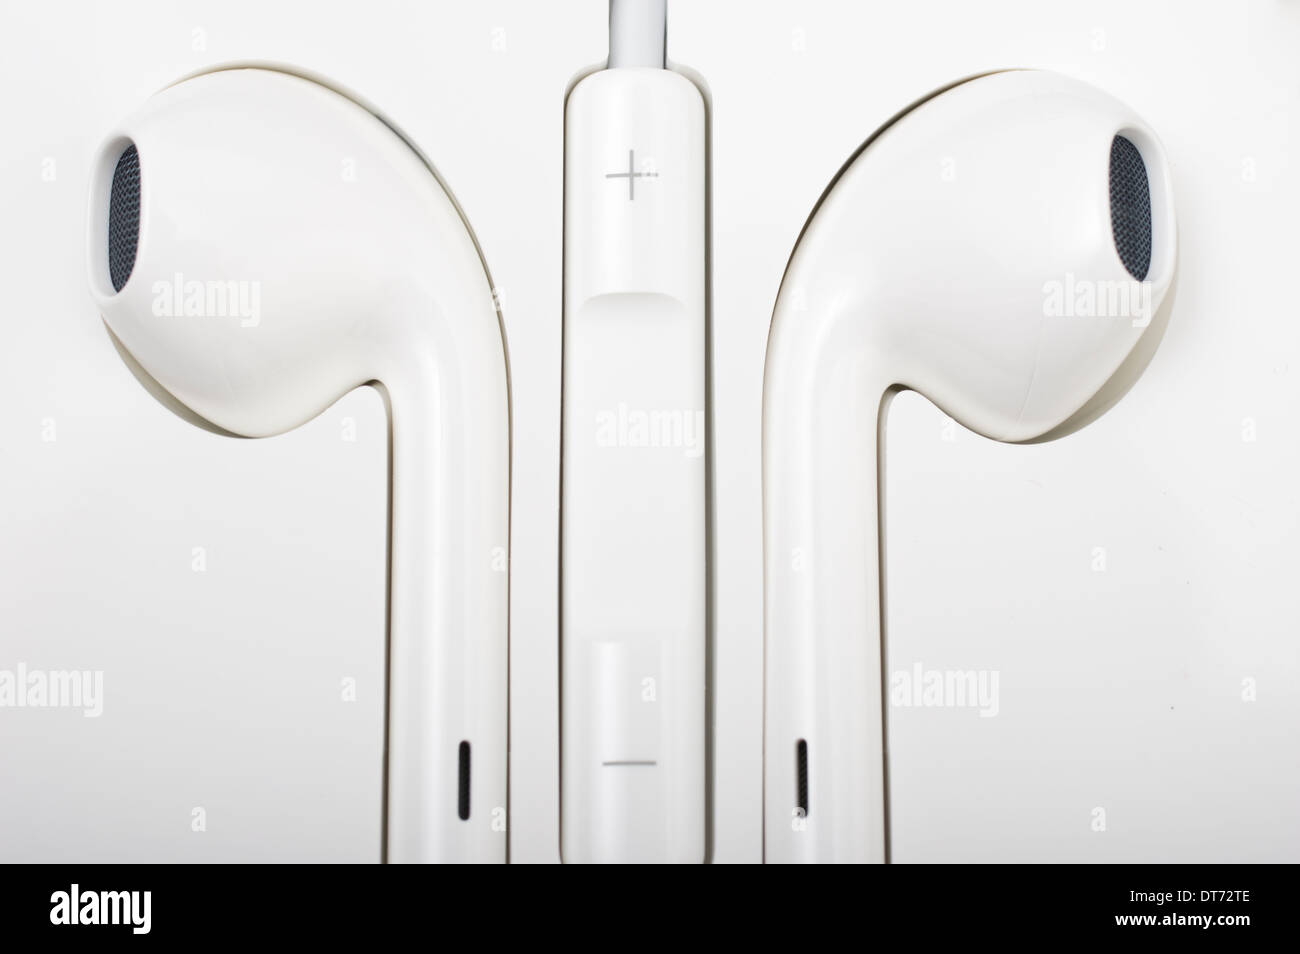 Apple EarPods ( new earbuds) iconic white earphones Stock Photo